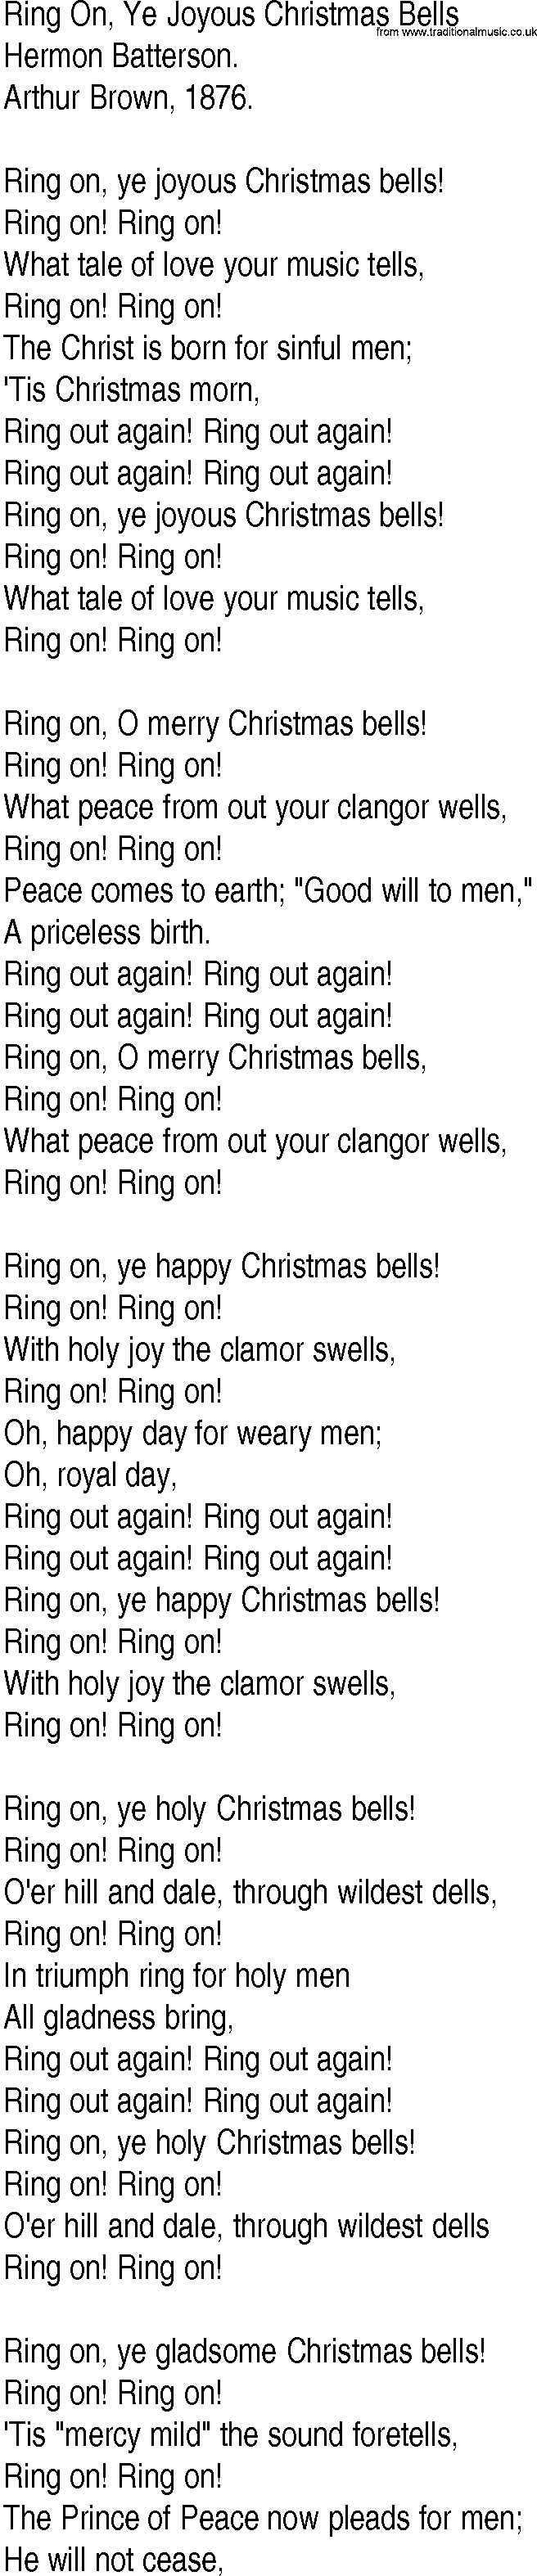 Hymn and Gospel Song: Ring On, Ye Joyous Christmas Bells by Hera­mon Bata­tera­son lyrics